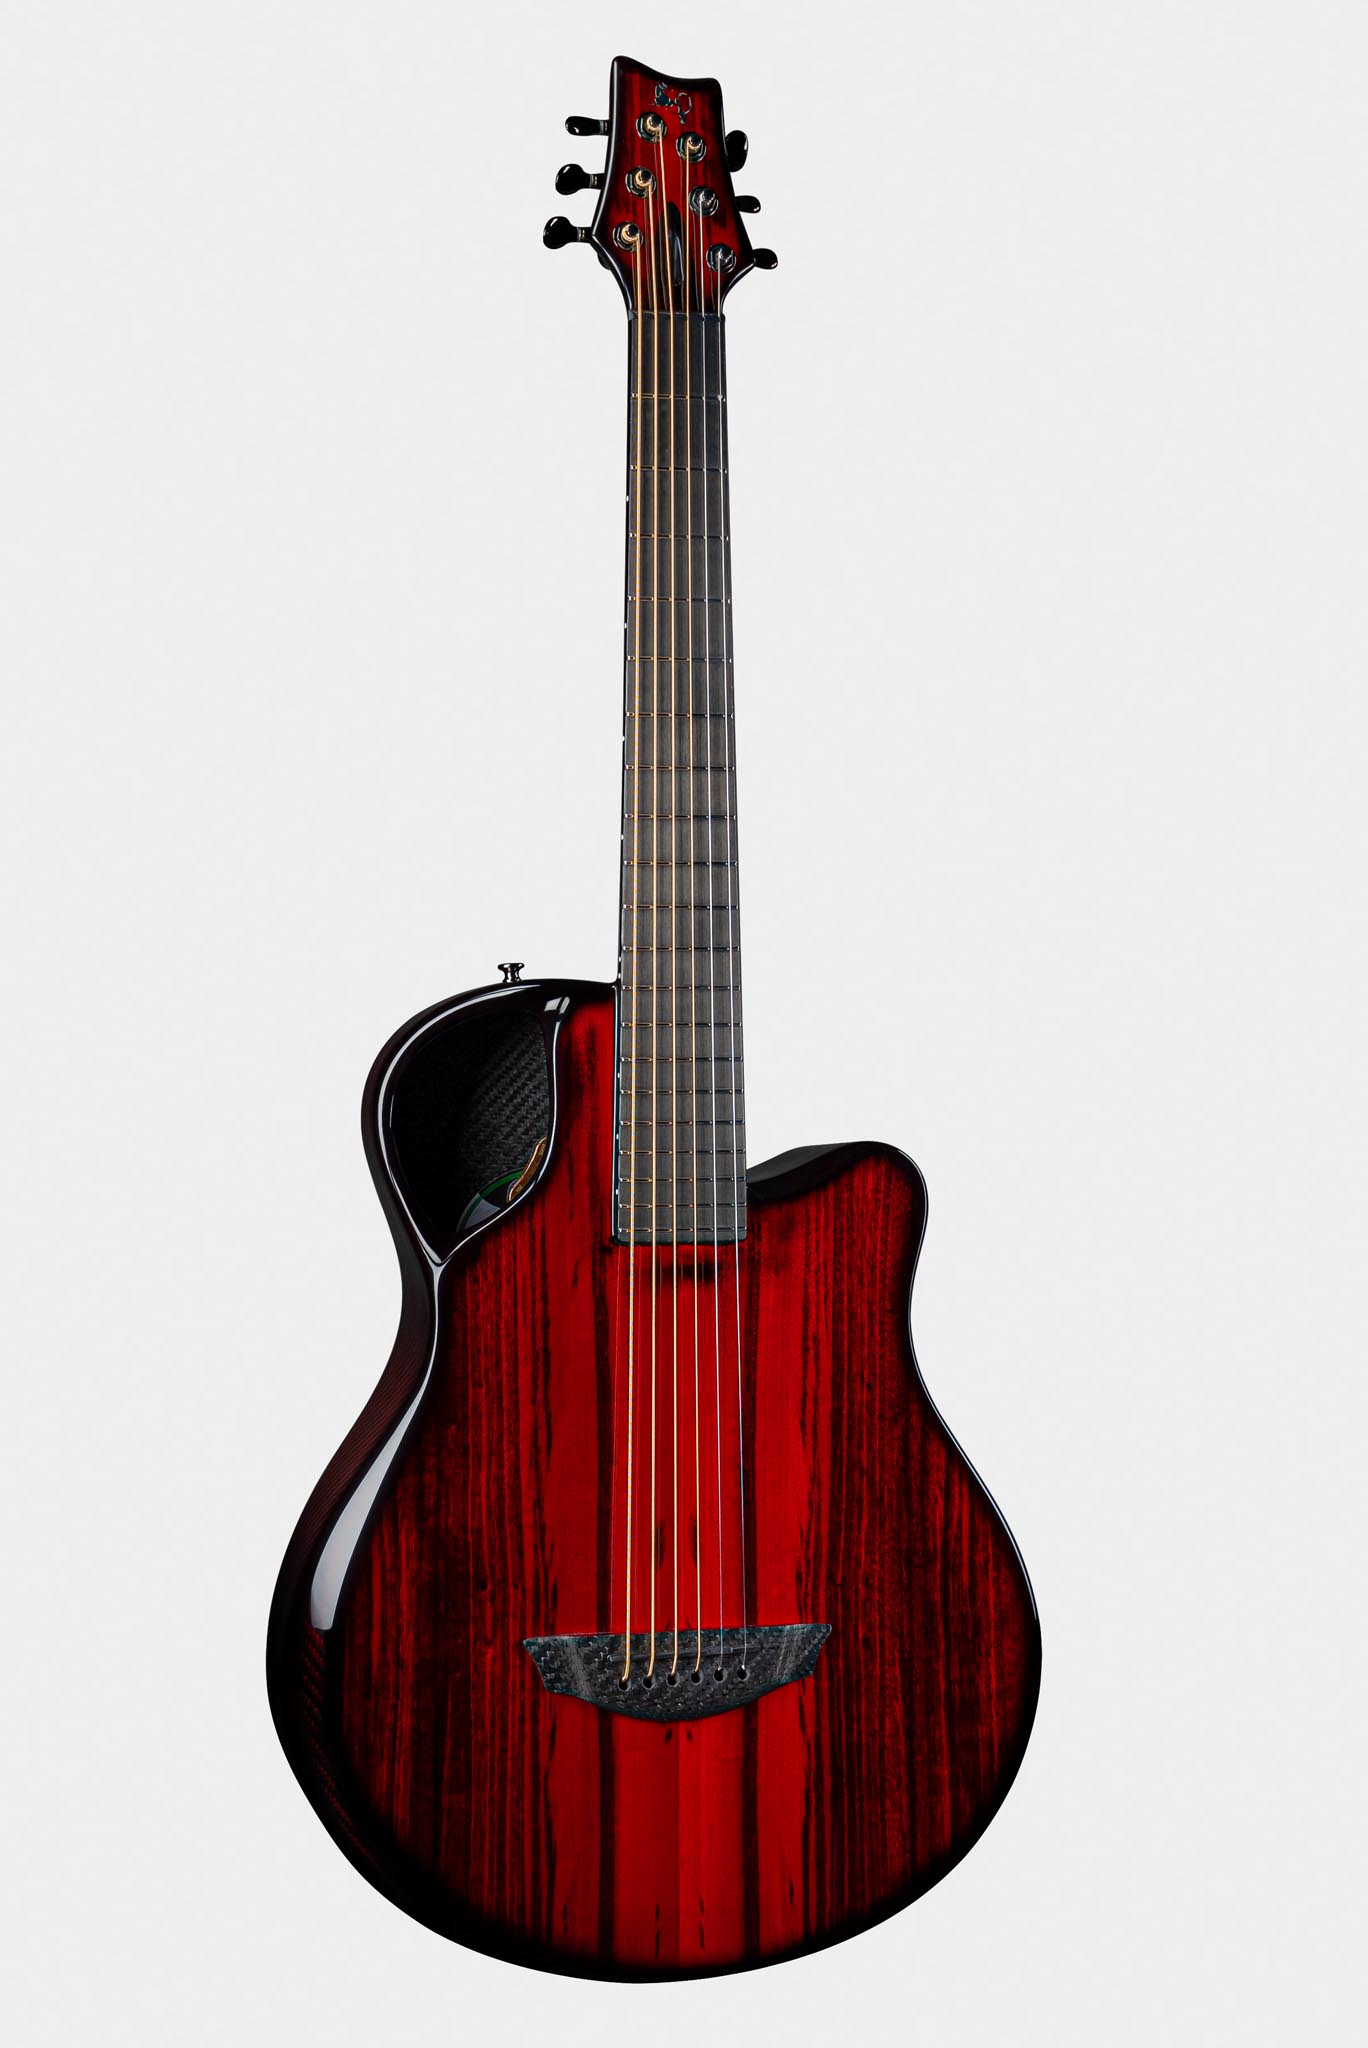 Emerald X7 Guitar in Red Harborica finish